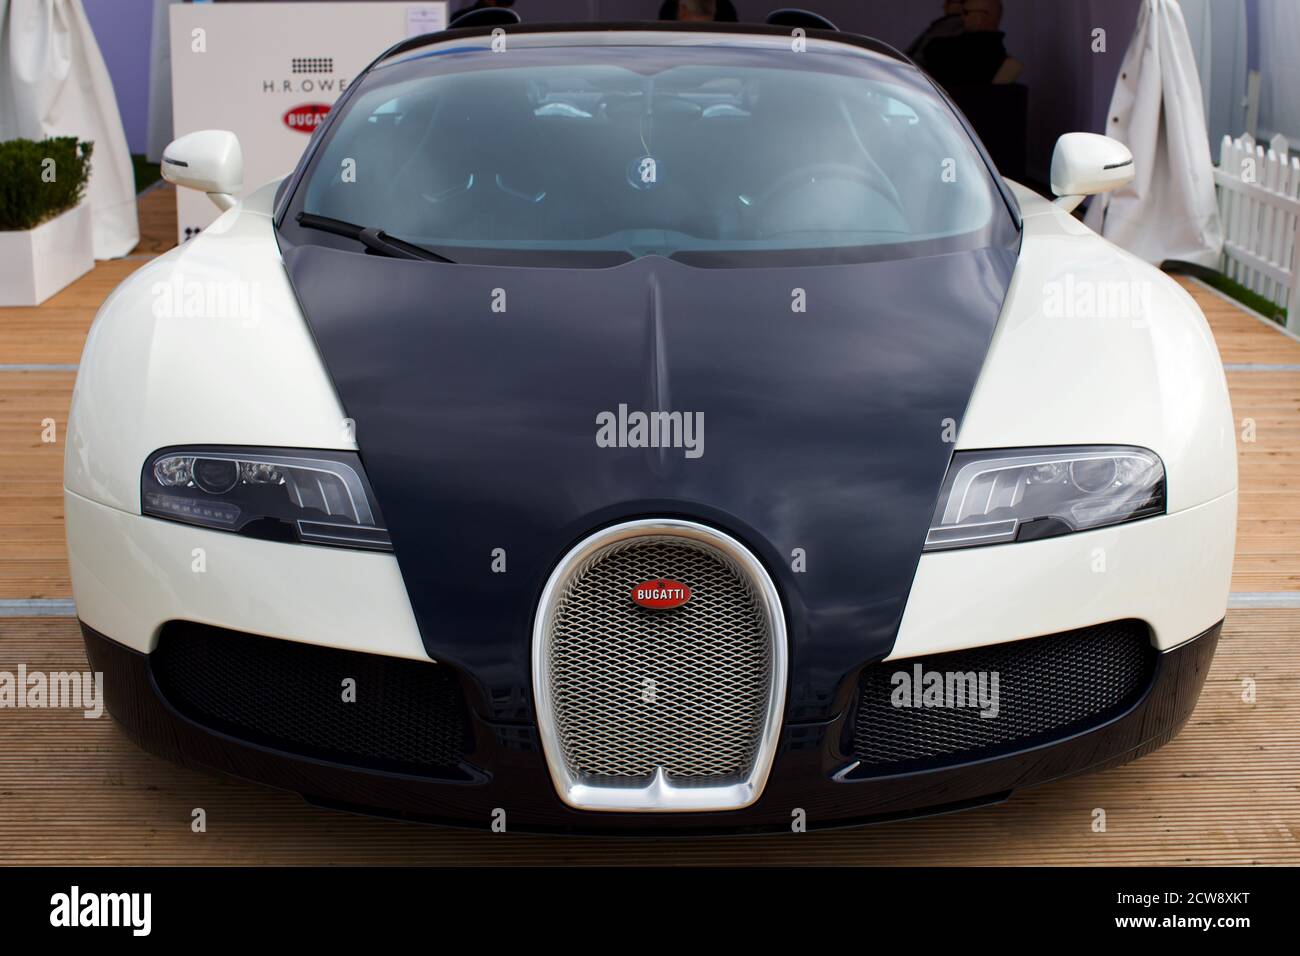 Bugatti Veyron on display at the 2020 Salon Privé held at Blenheim Palace, Oxfordshire Stock Photo